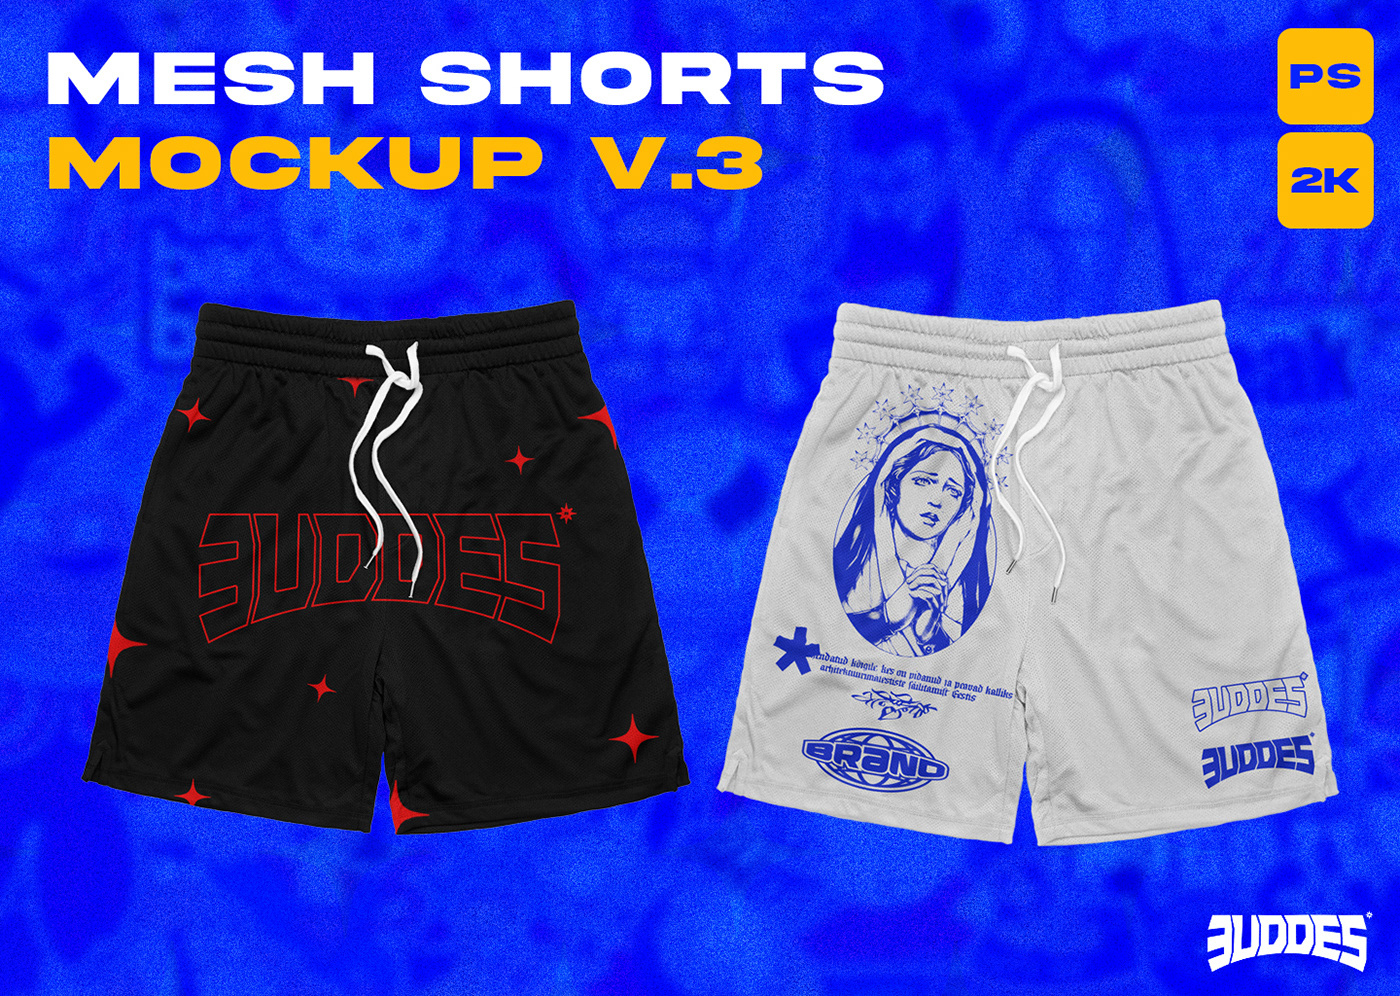 Mesh Shorts Mockup v.3 by 3UDDES on Dribbble